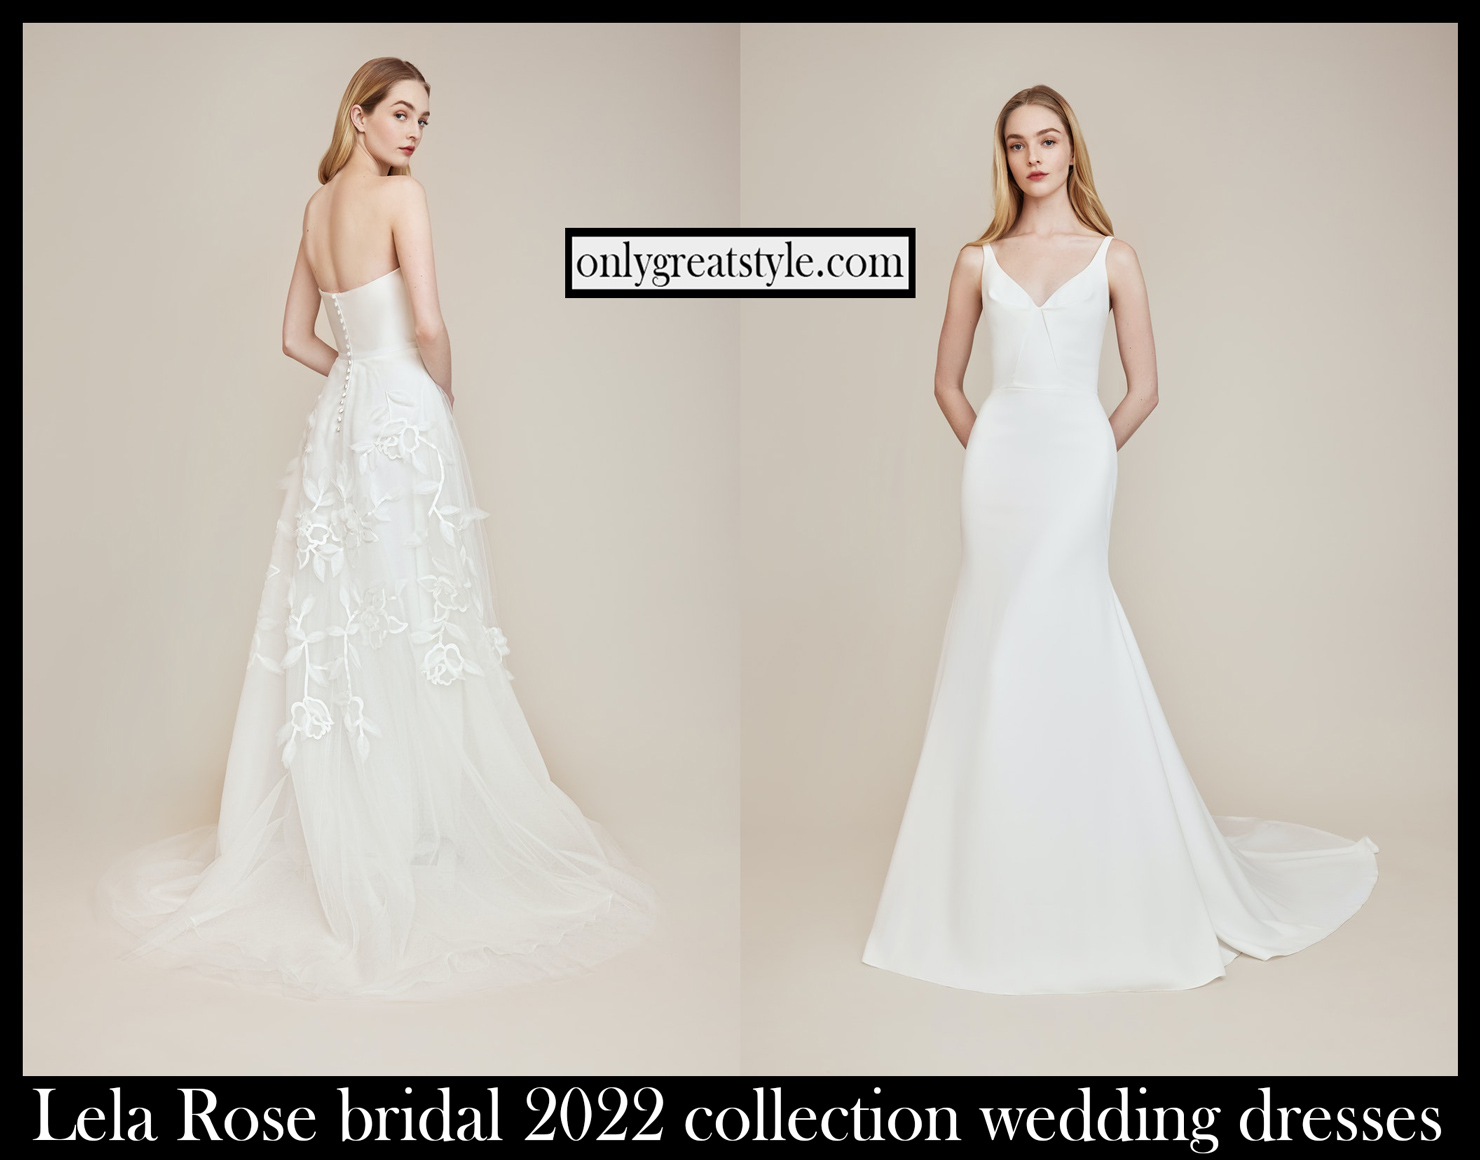 Lela Rose bridal 2022 collection wedding dresses